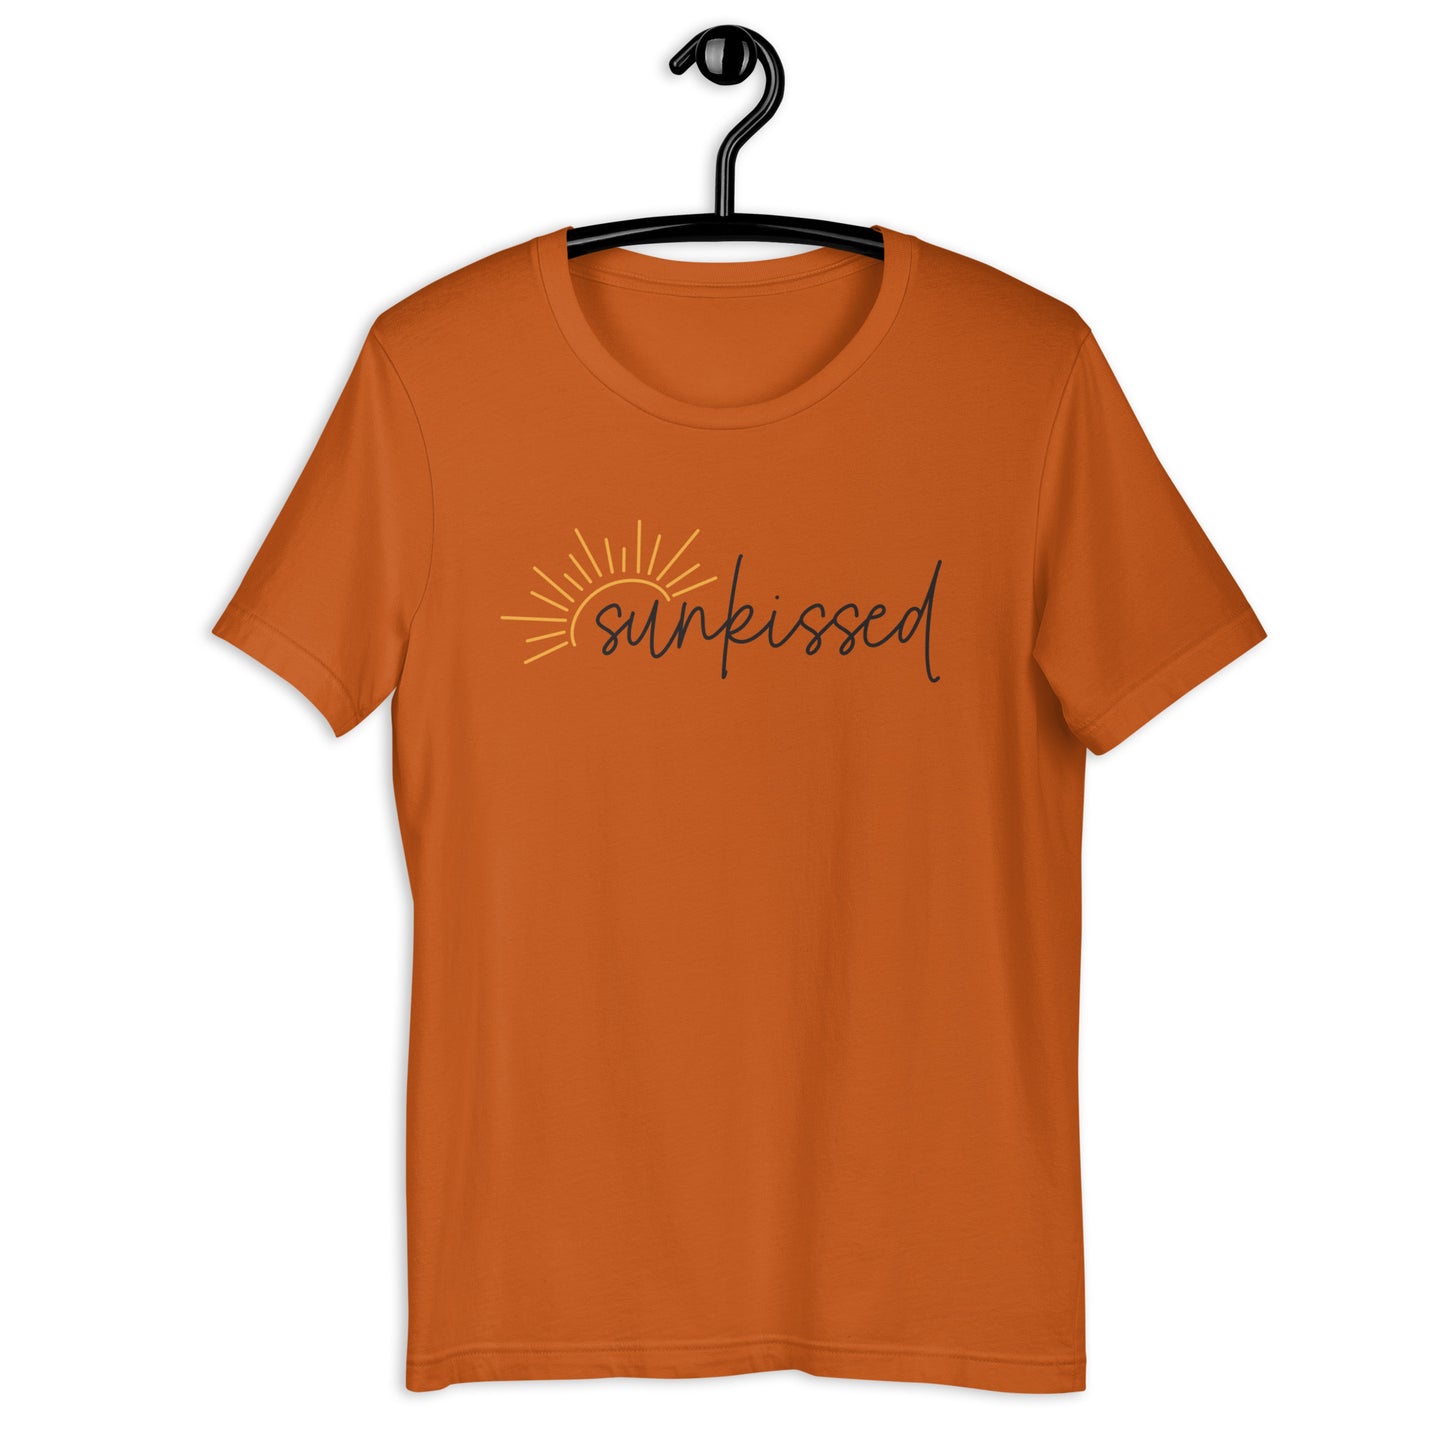 Sunkissed - Unisex t-shirt